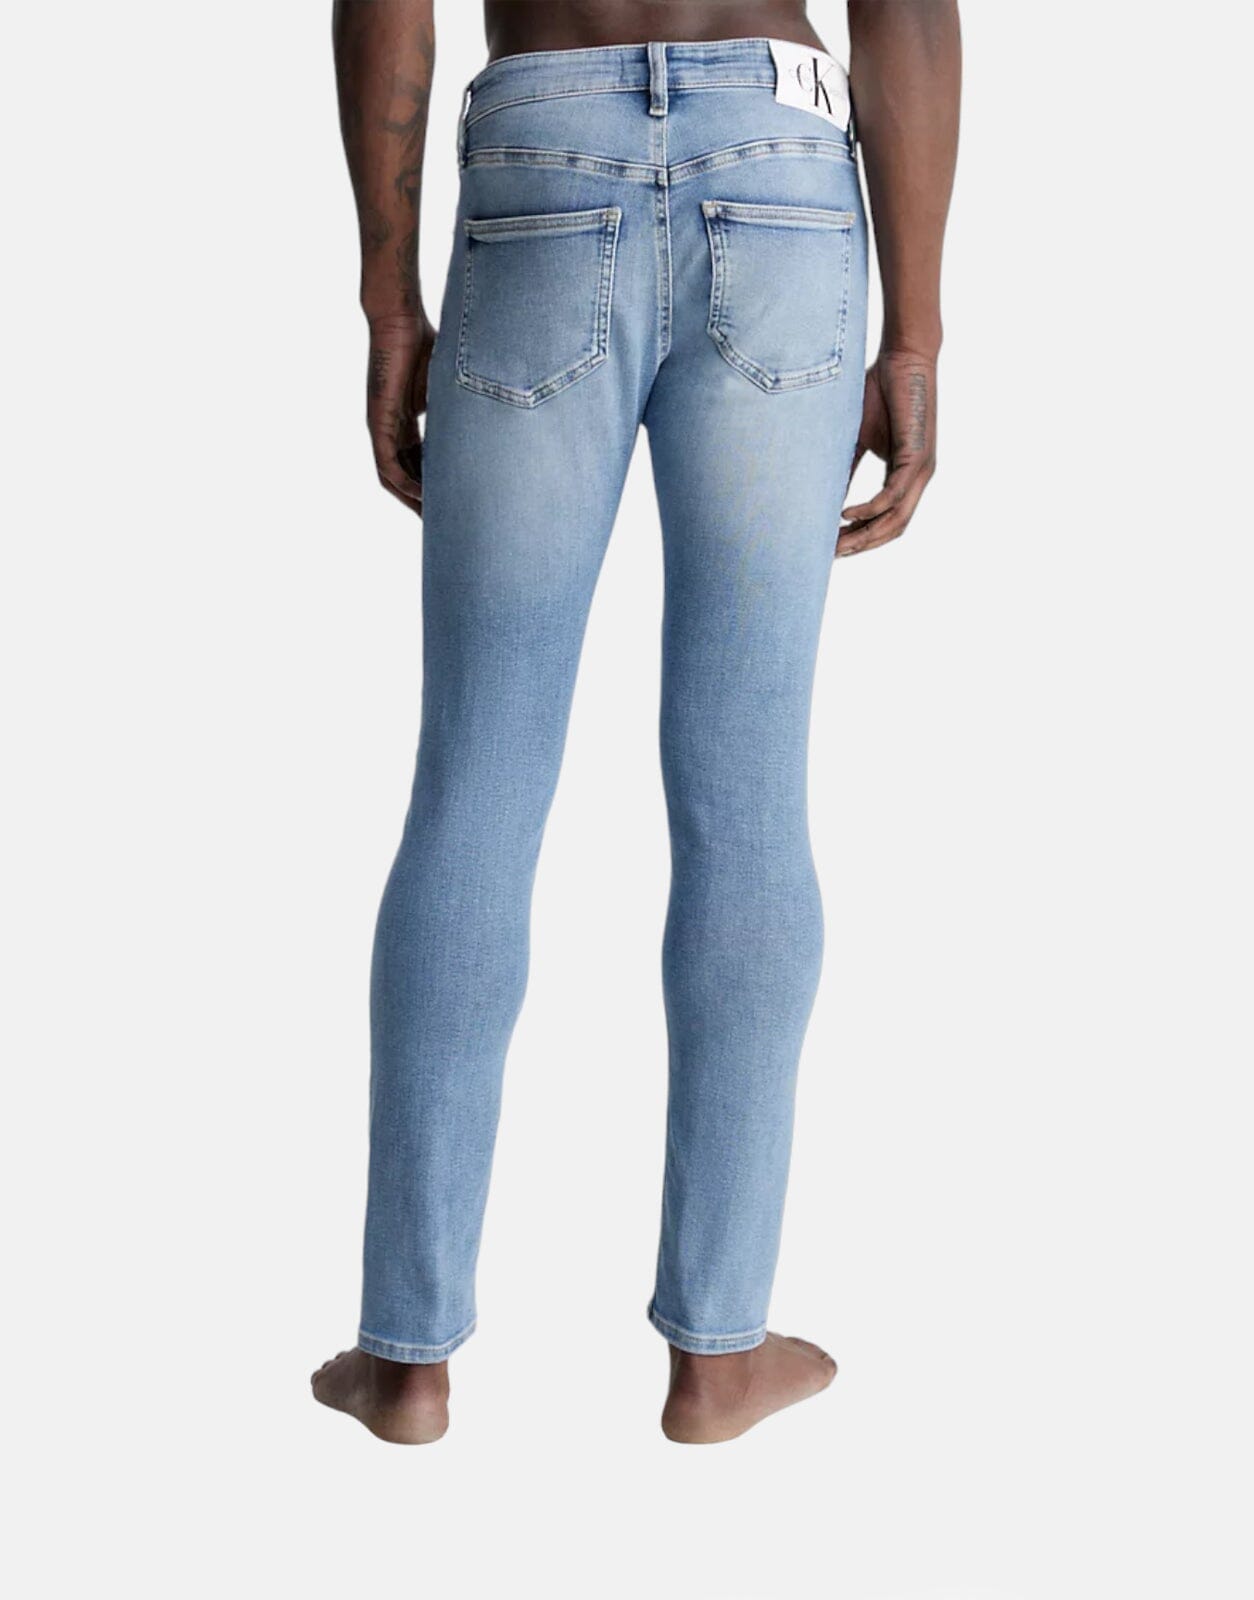 Calvin Klein Skinny Light Wash Jeans - Subwear